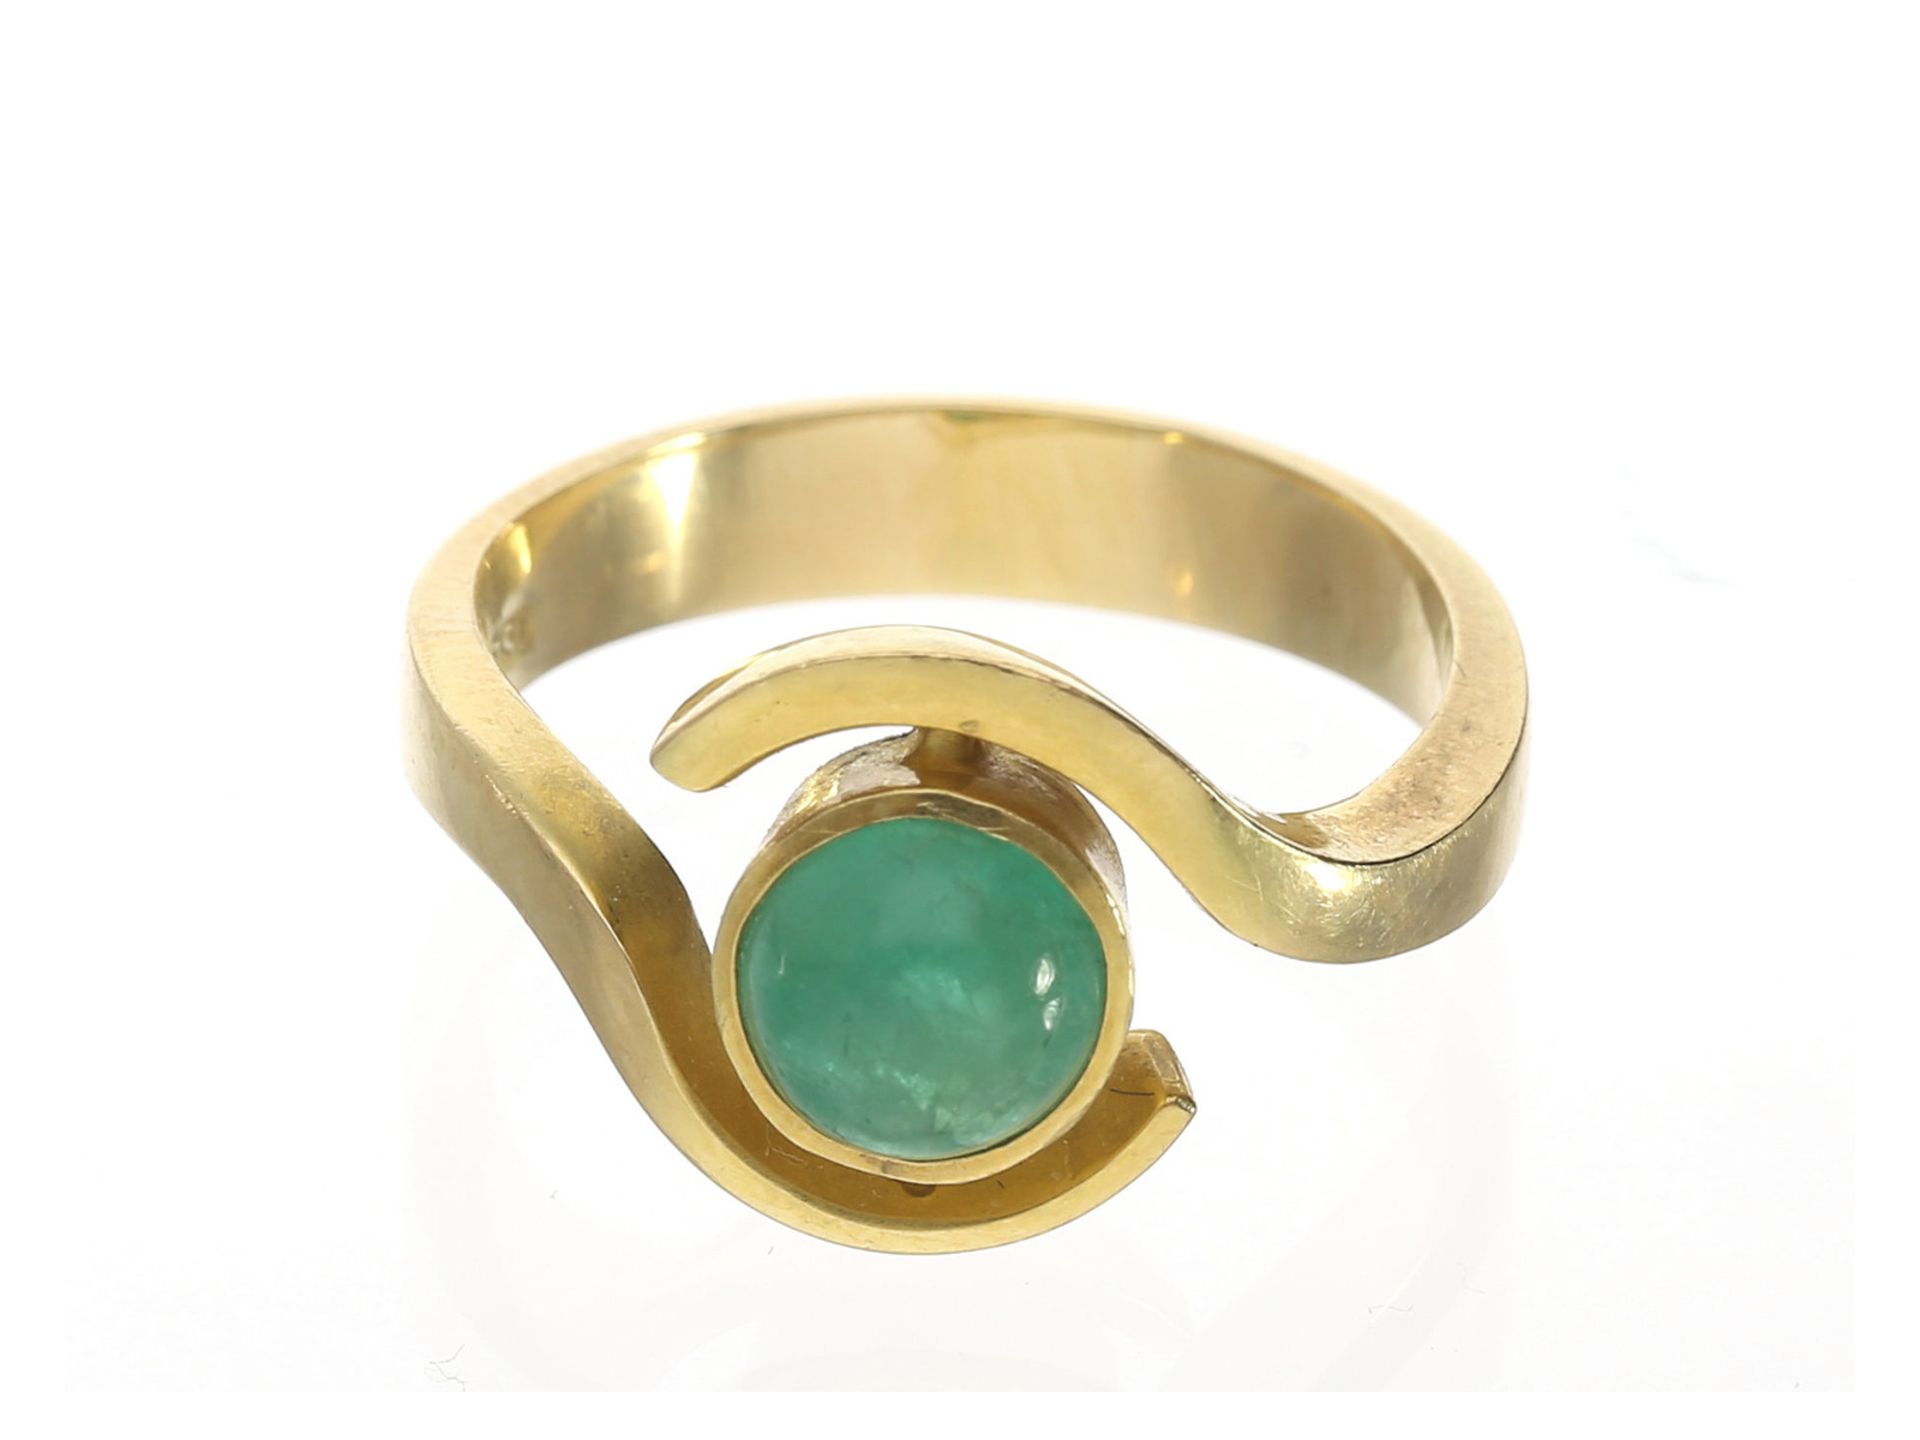 Ring: Goldschmiedering mit Smaragd-Cabochon, hochwertige Handarbeit, 18K GoldCa. Ø17,5mm, RG55,